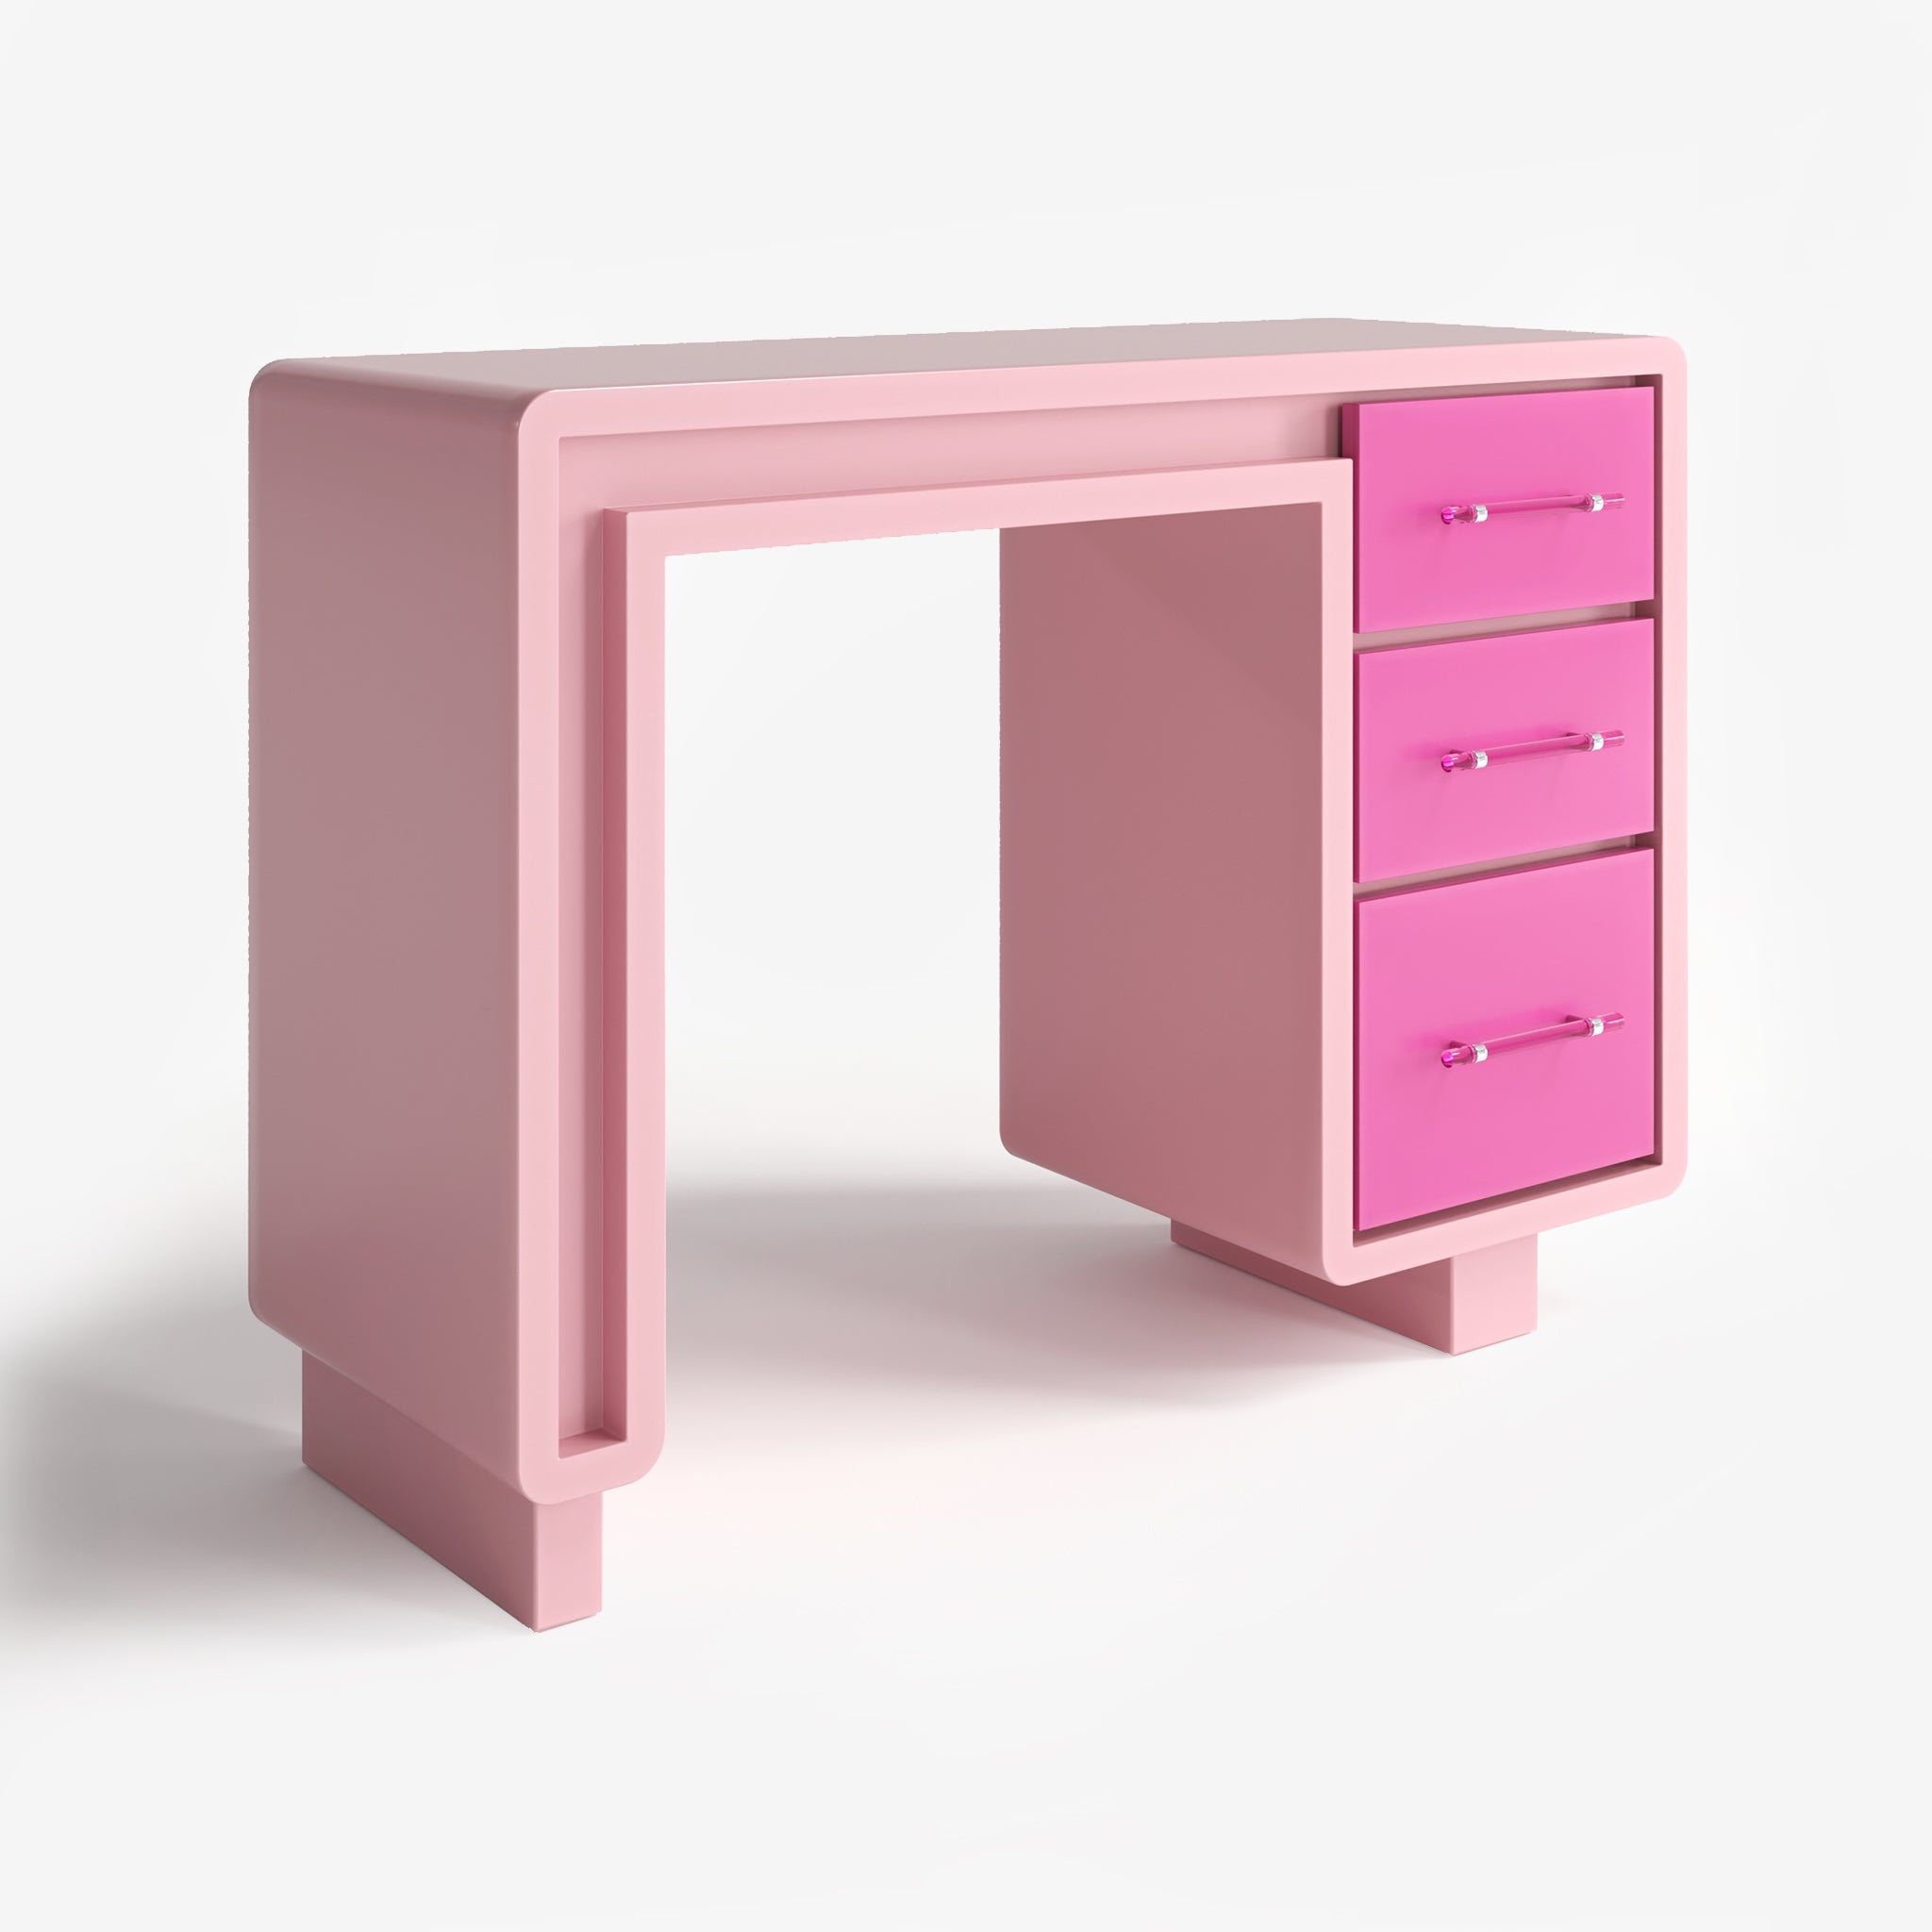 Luxury furniture, Barbie Inspired Dressing Tablel, 3 Drawers, Pink, Contemporary Design, Modern Design, Upholstery, Bedroom